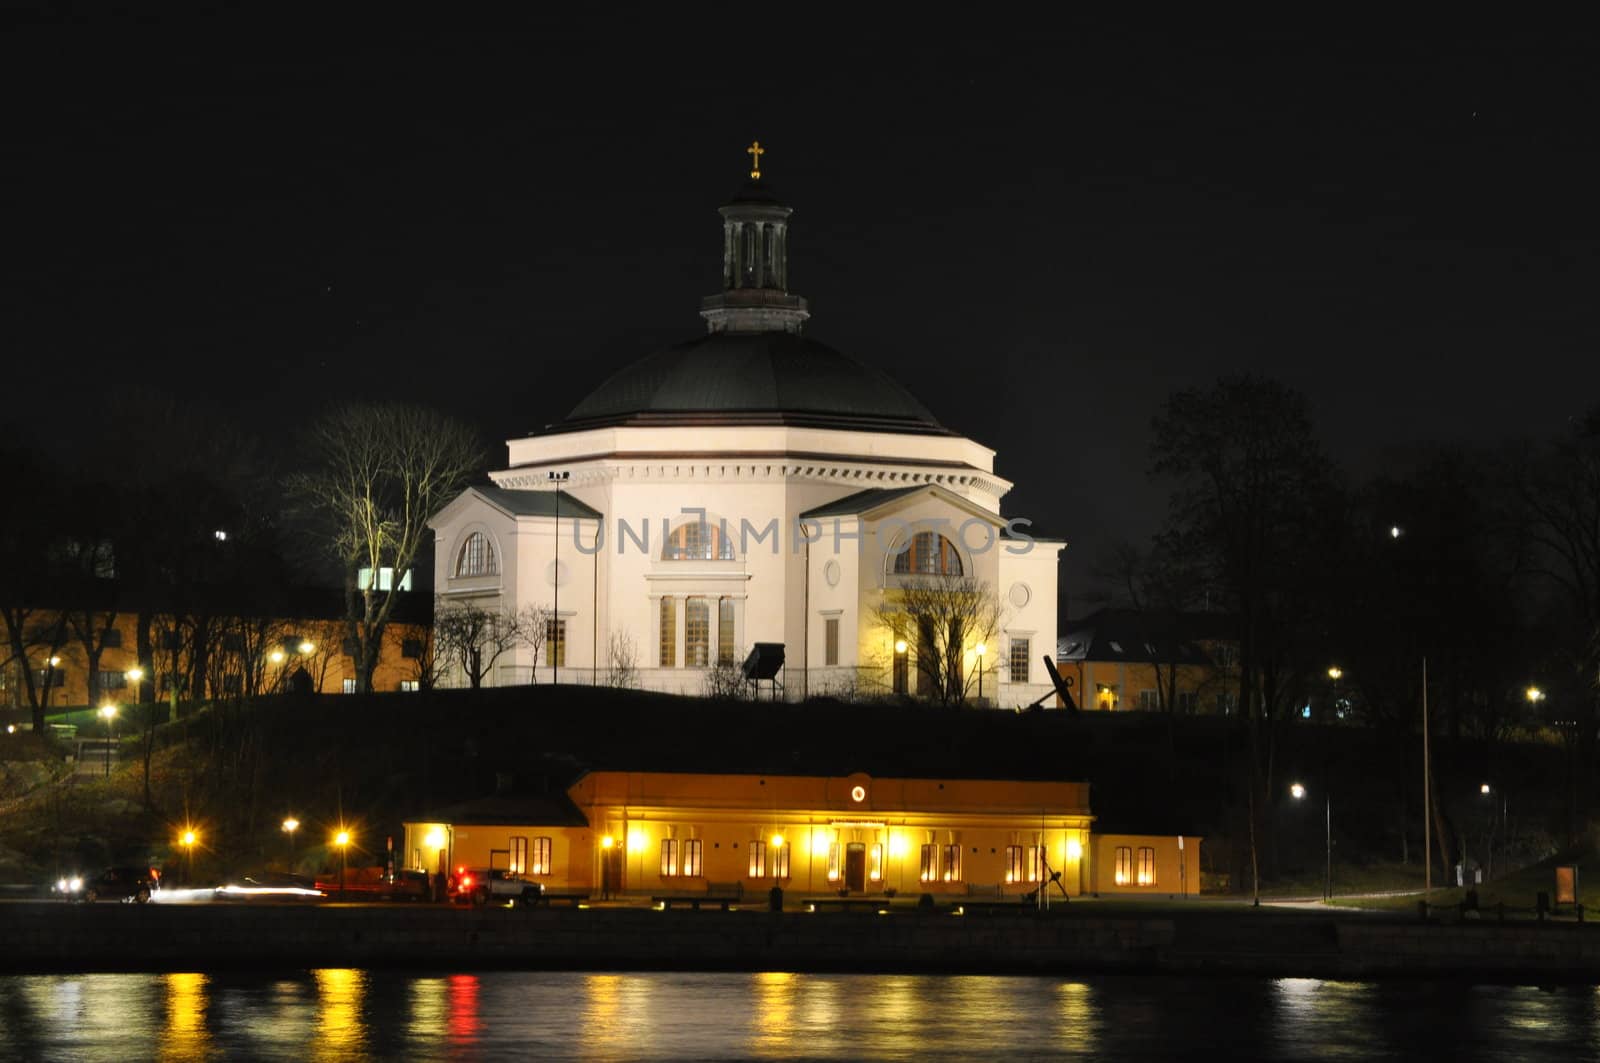 The CarlJohans church located on Skeppsholmen in Stockholm.